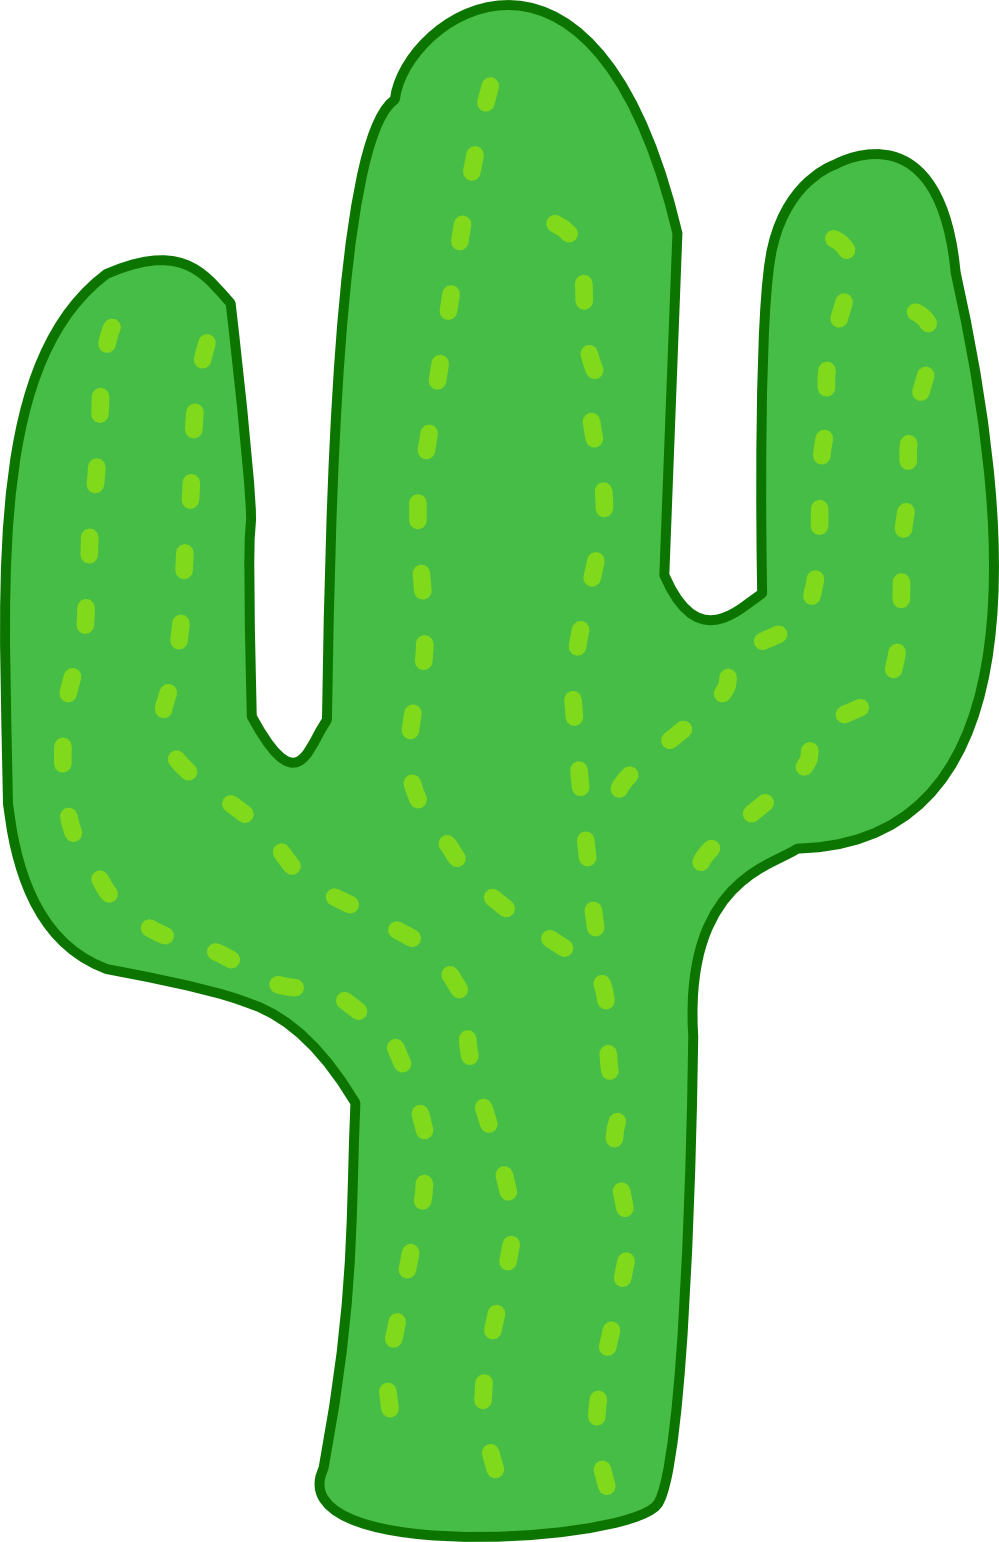 Cactus clipart free images